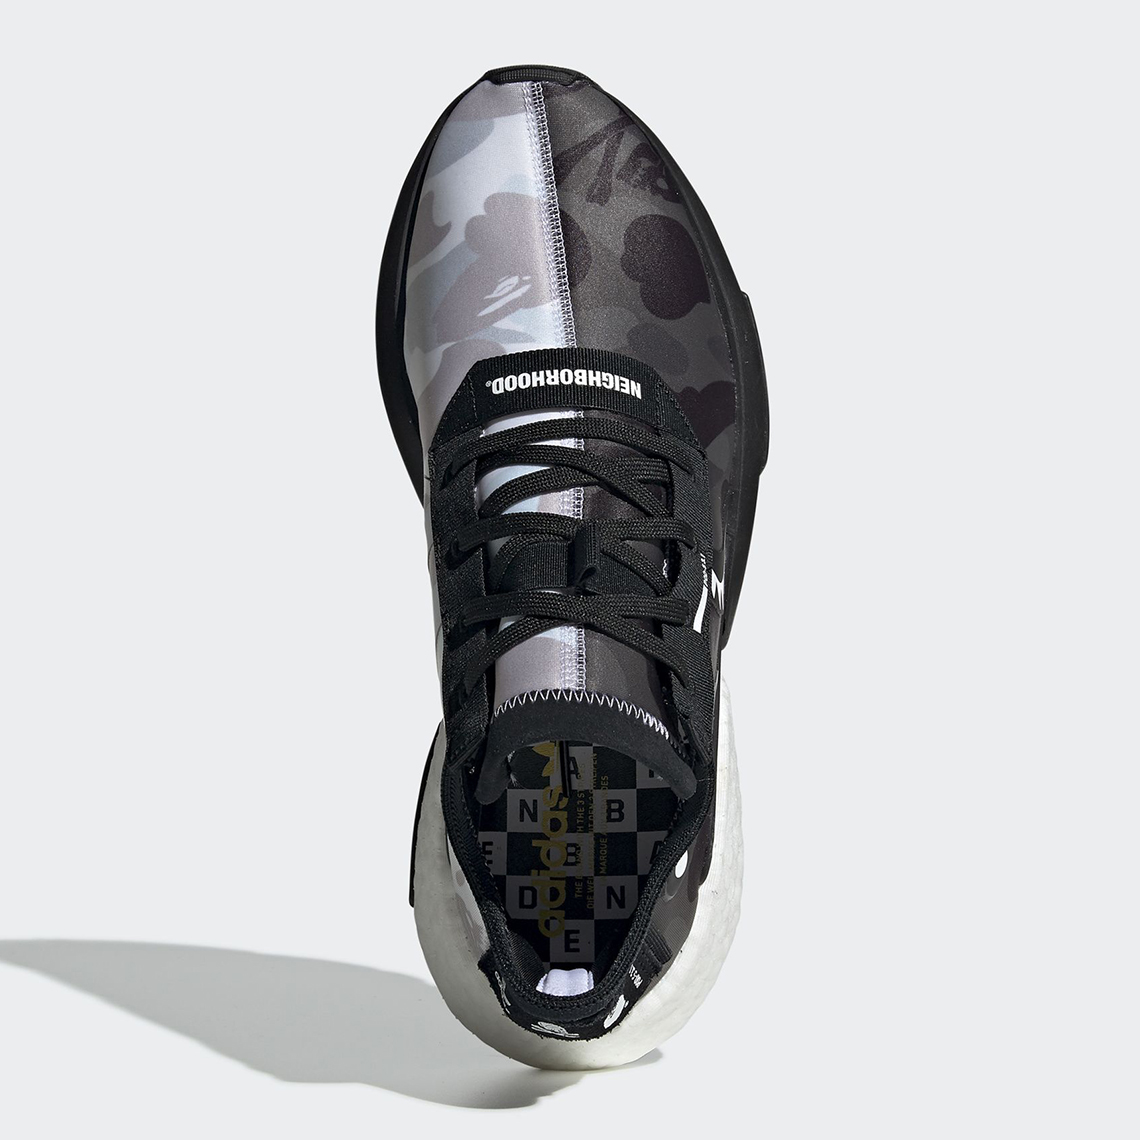 Konsulat Initiativ Egen Bape Neighborhood adidas POD s3.1 EE9431 Info | SneakerNews.com